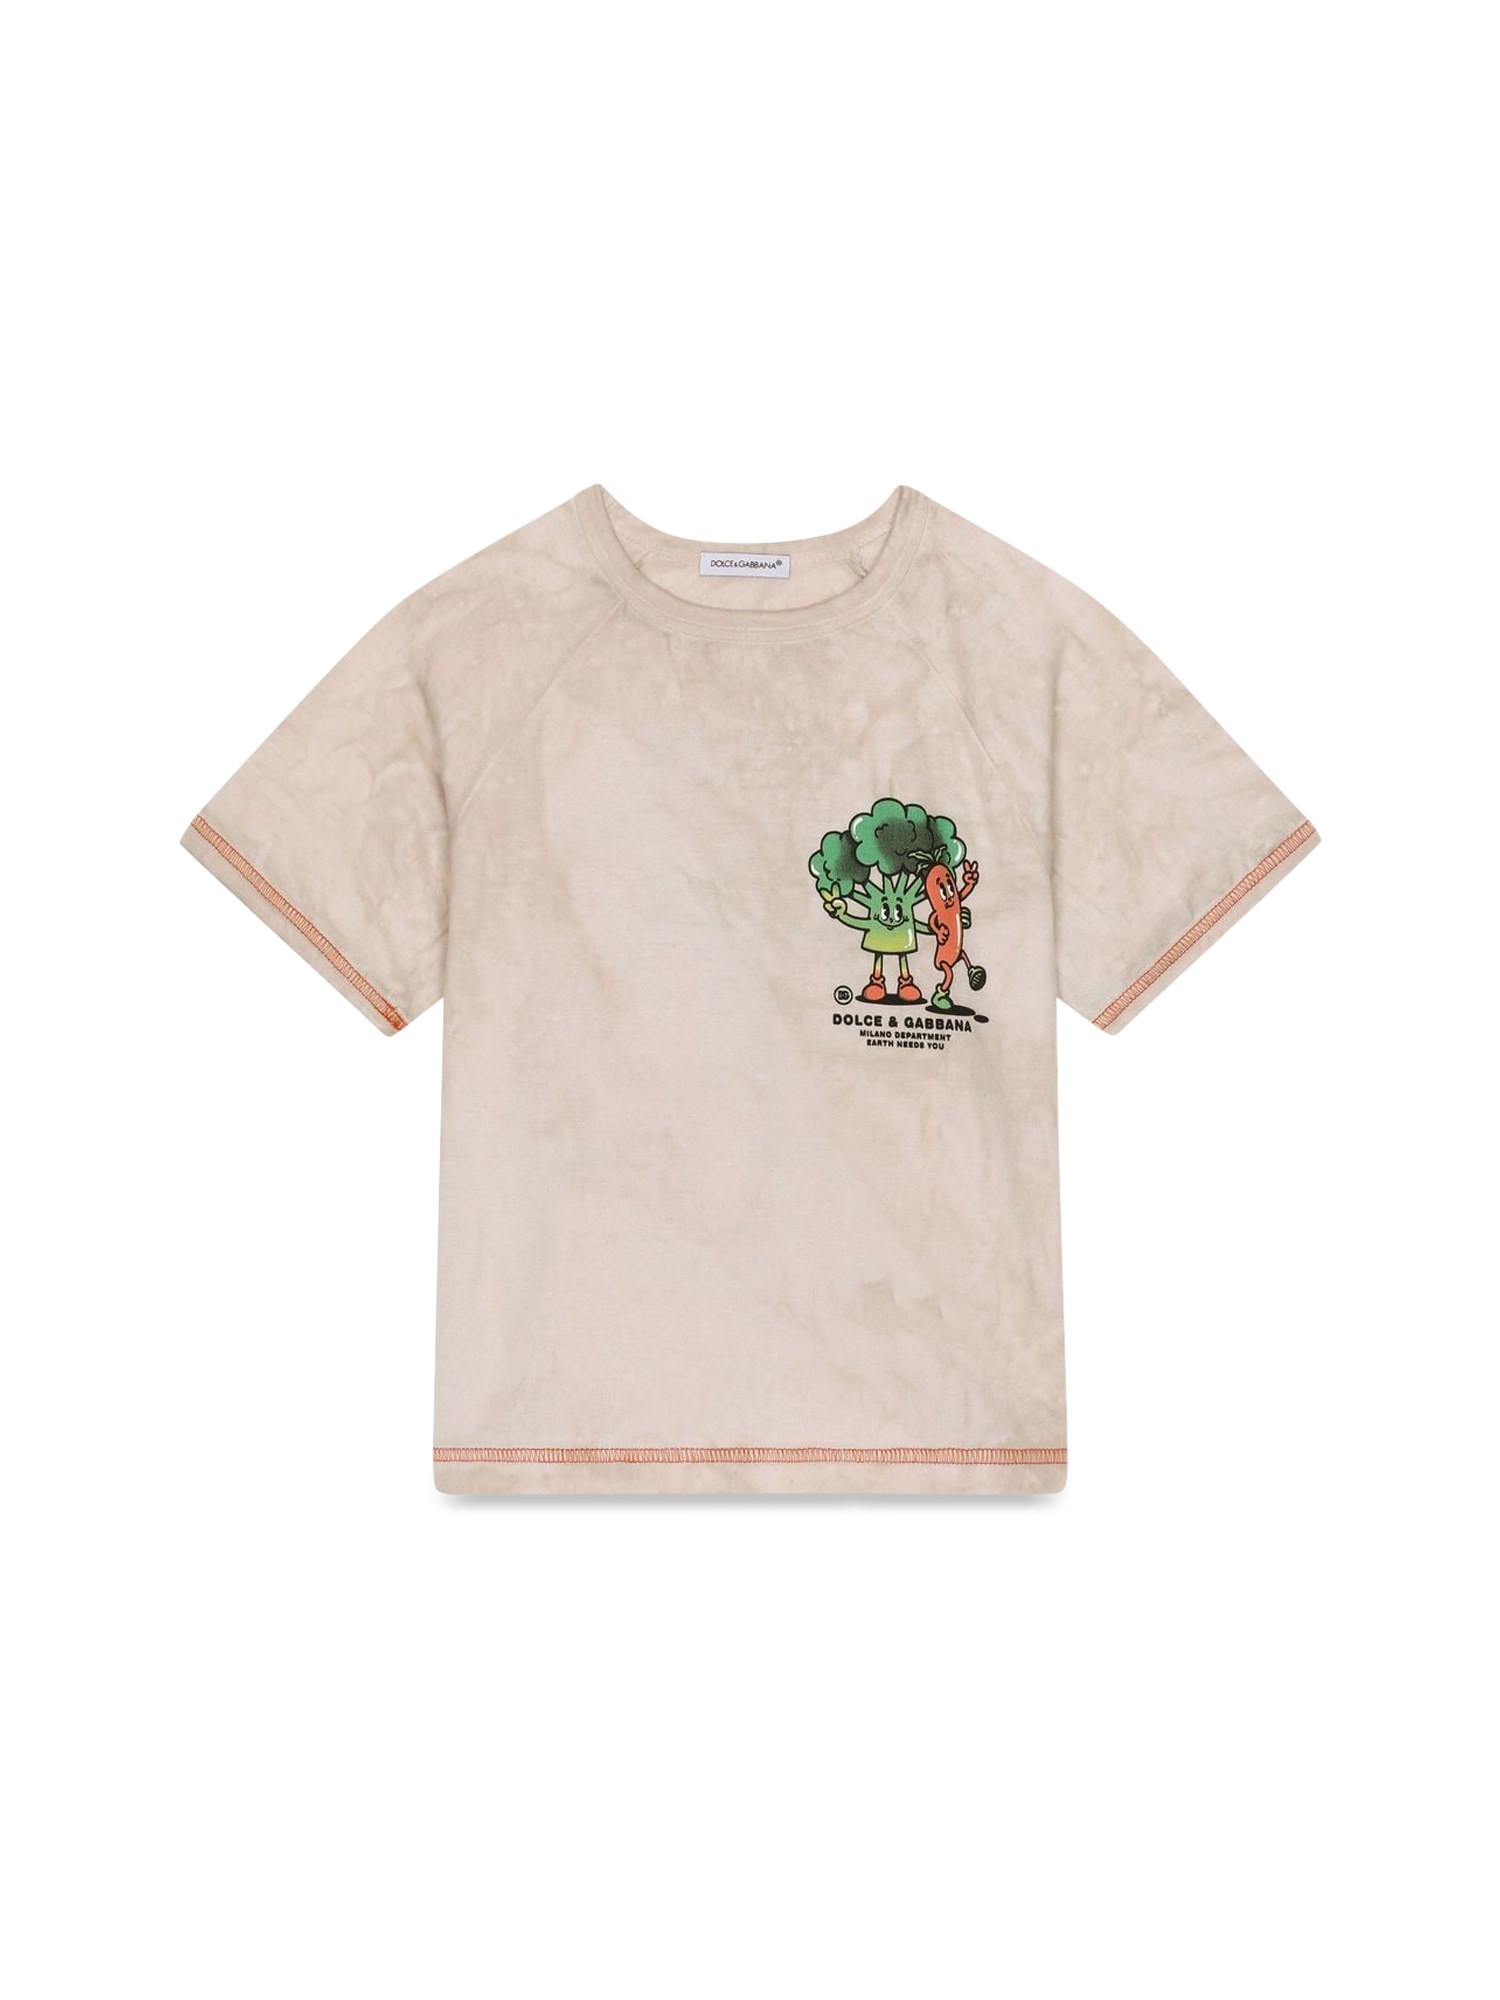 dolce & gabbana t-shirt m/c gardener